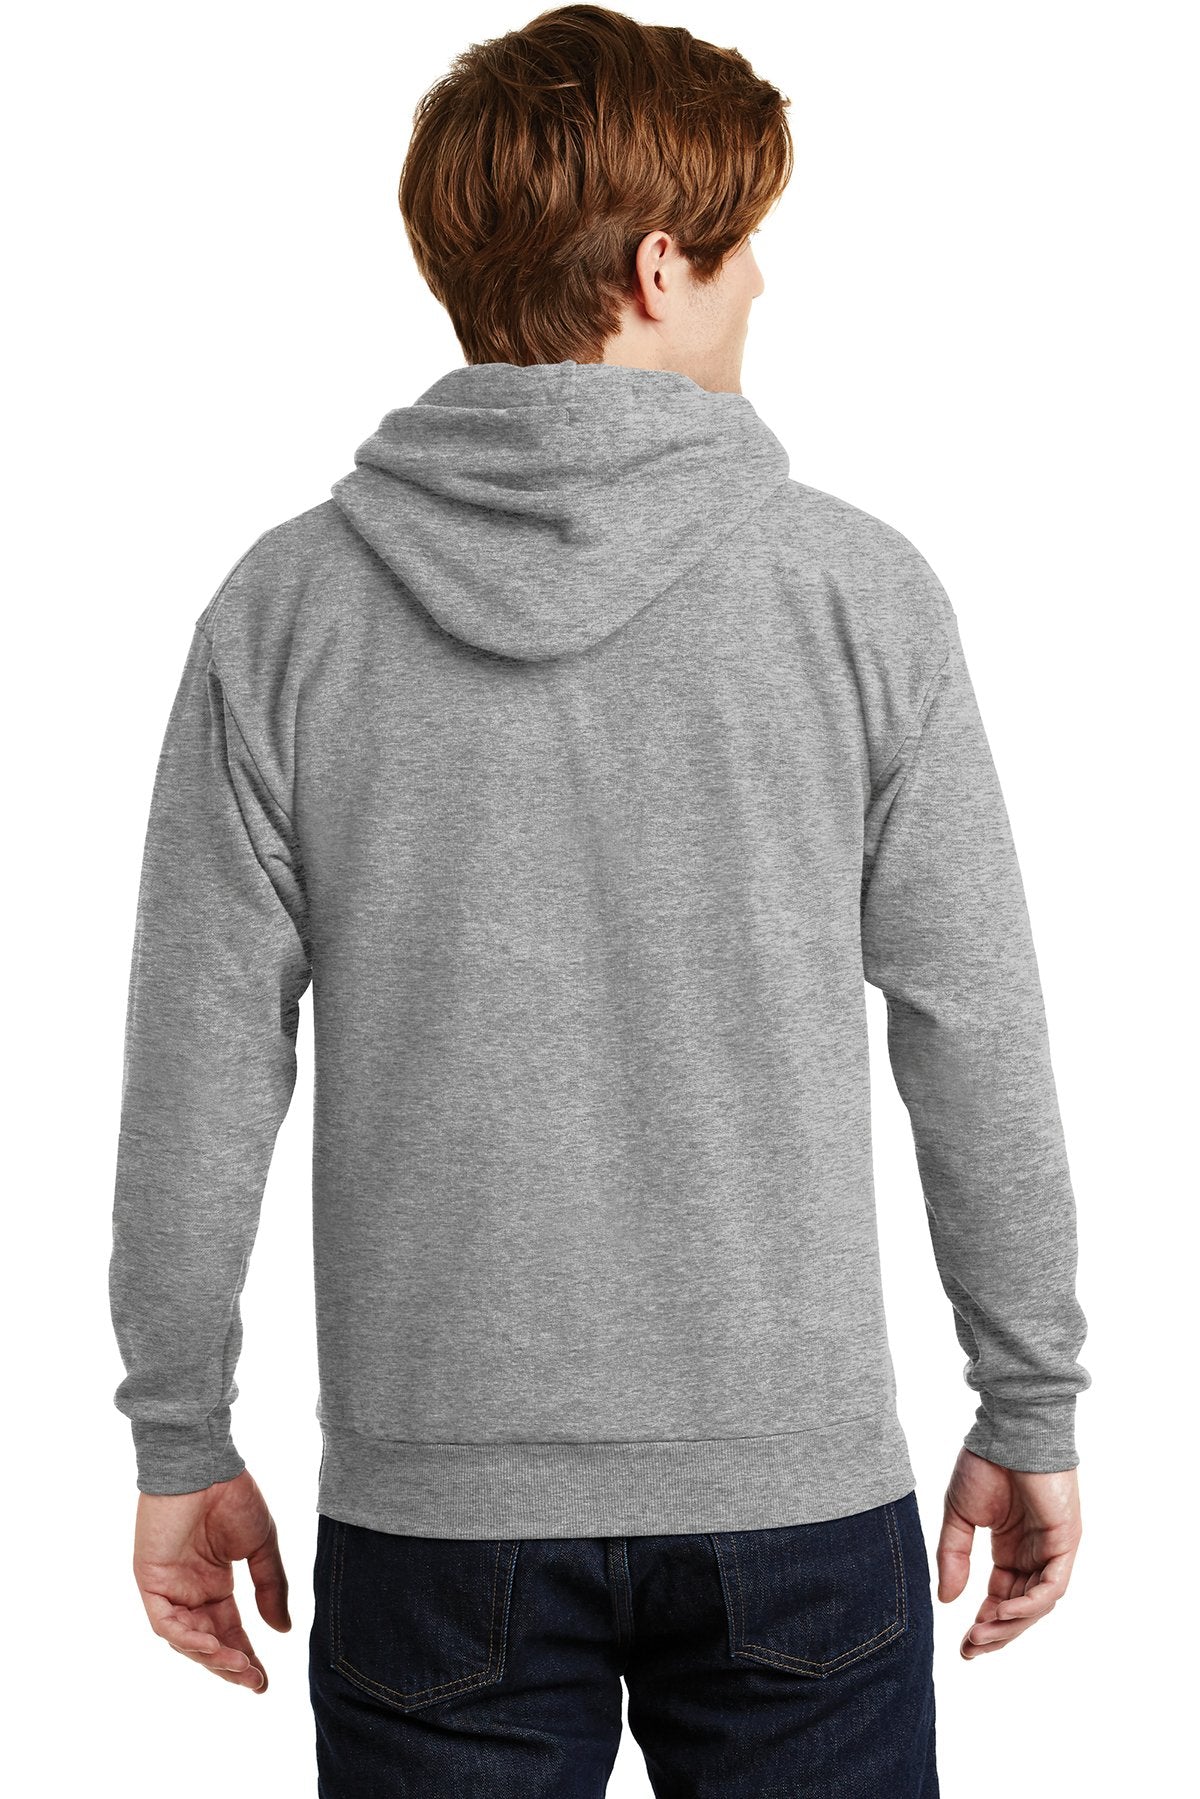 Hanes Ecosmart Pullover Hooded Sweatshirt P170 Light Steel